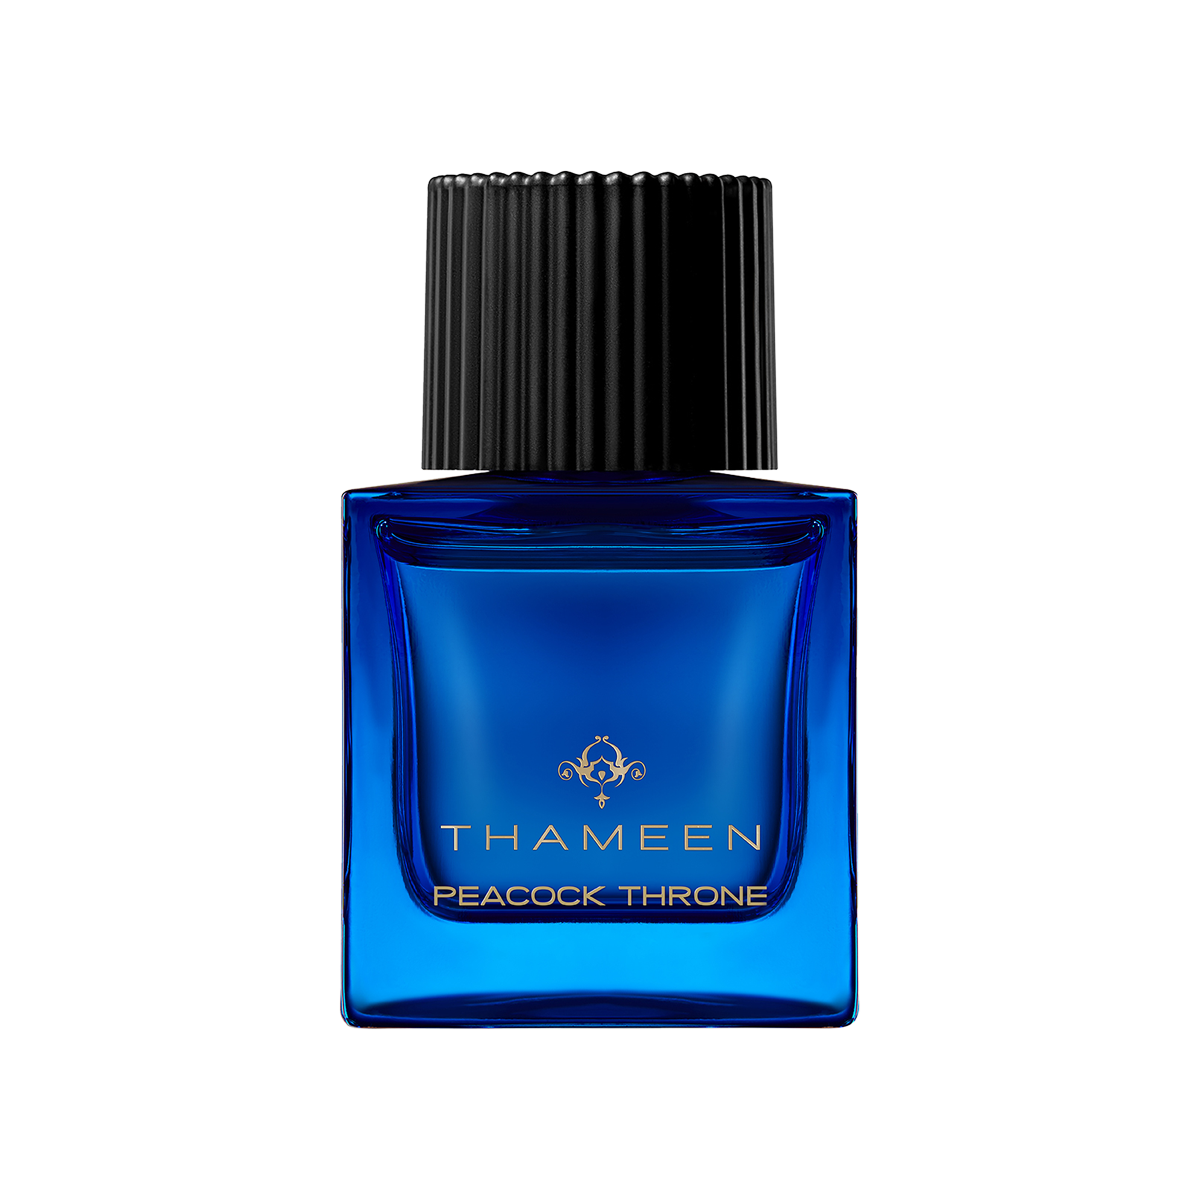 Thameen London - Peacock Throne Extrait de Parfum